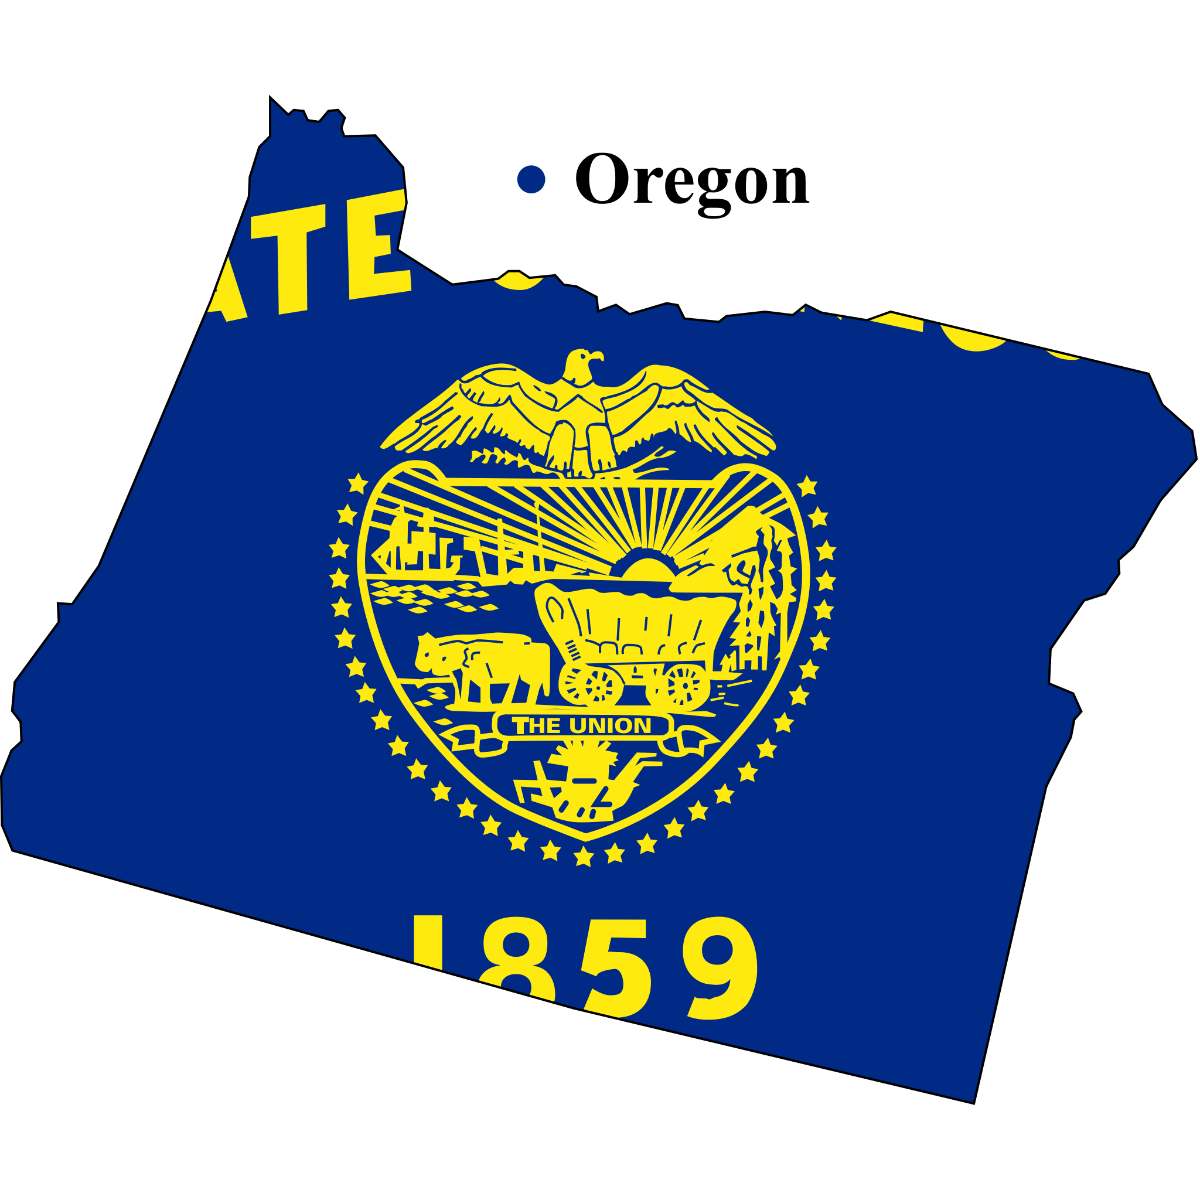 Oregon State map cutout with Oregon flag superimposed